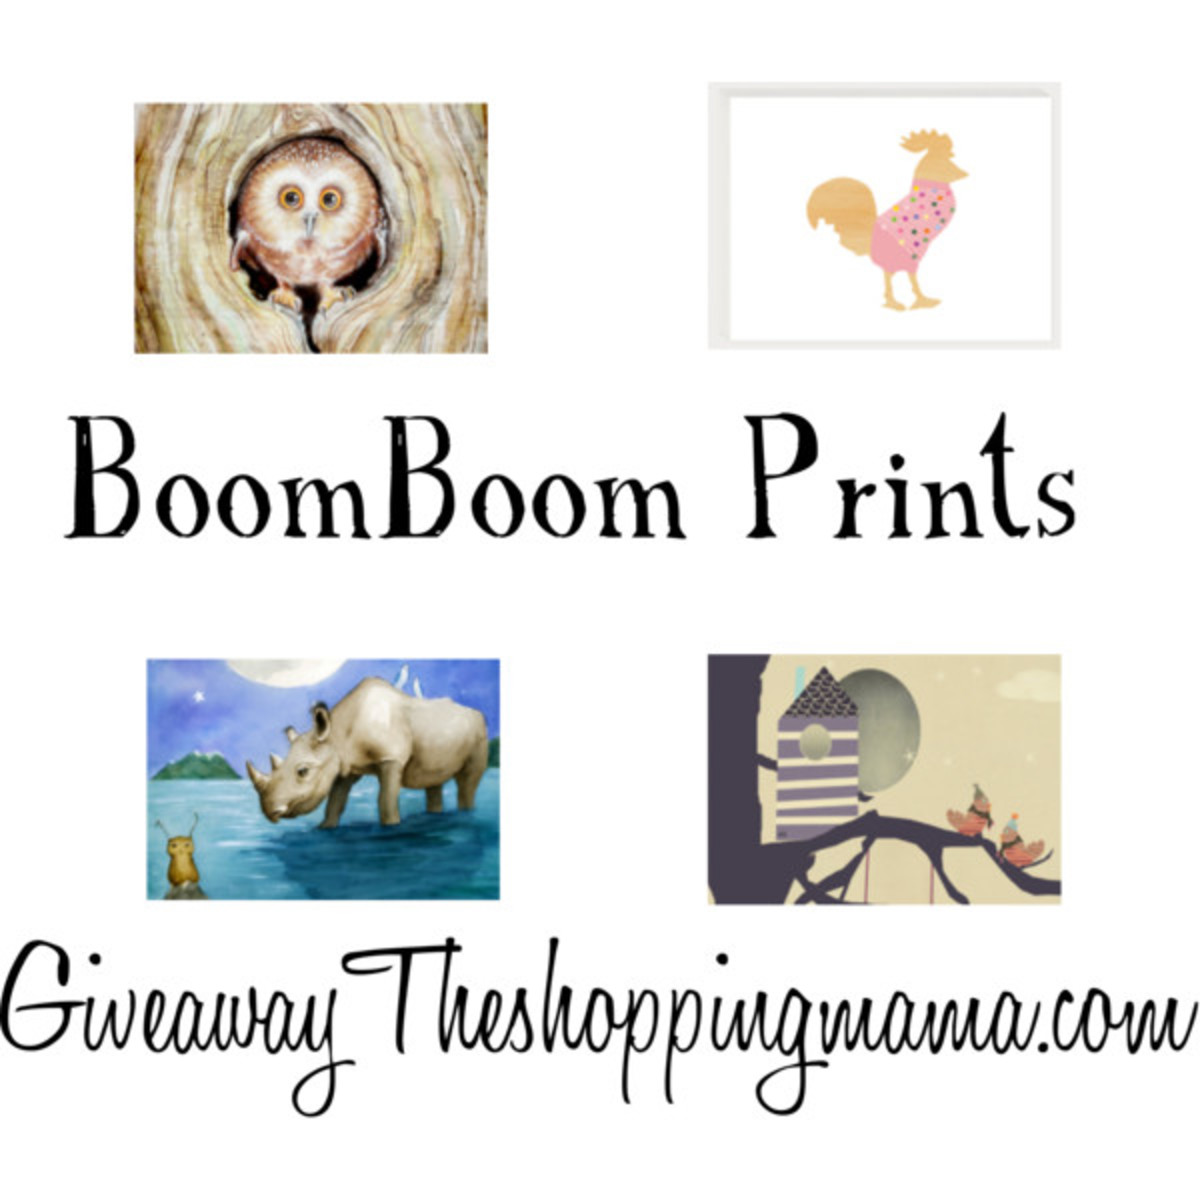 boomboom prints